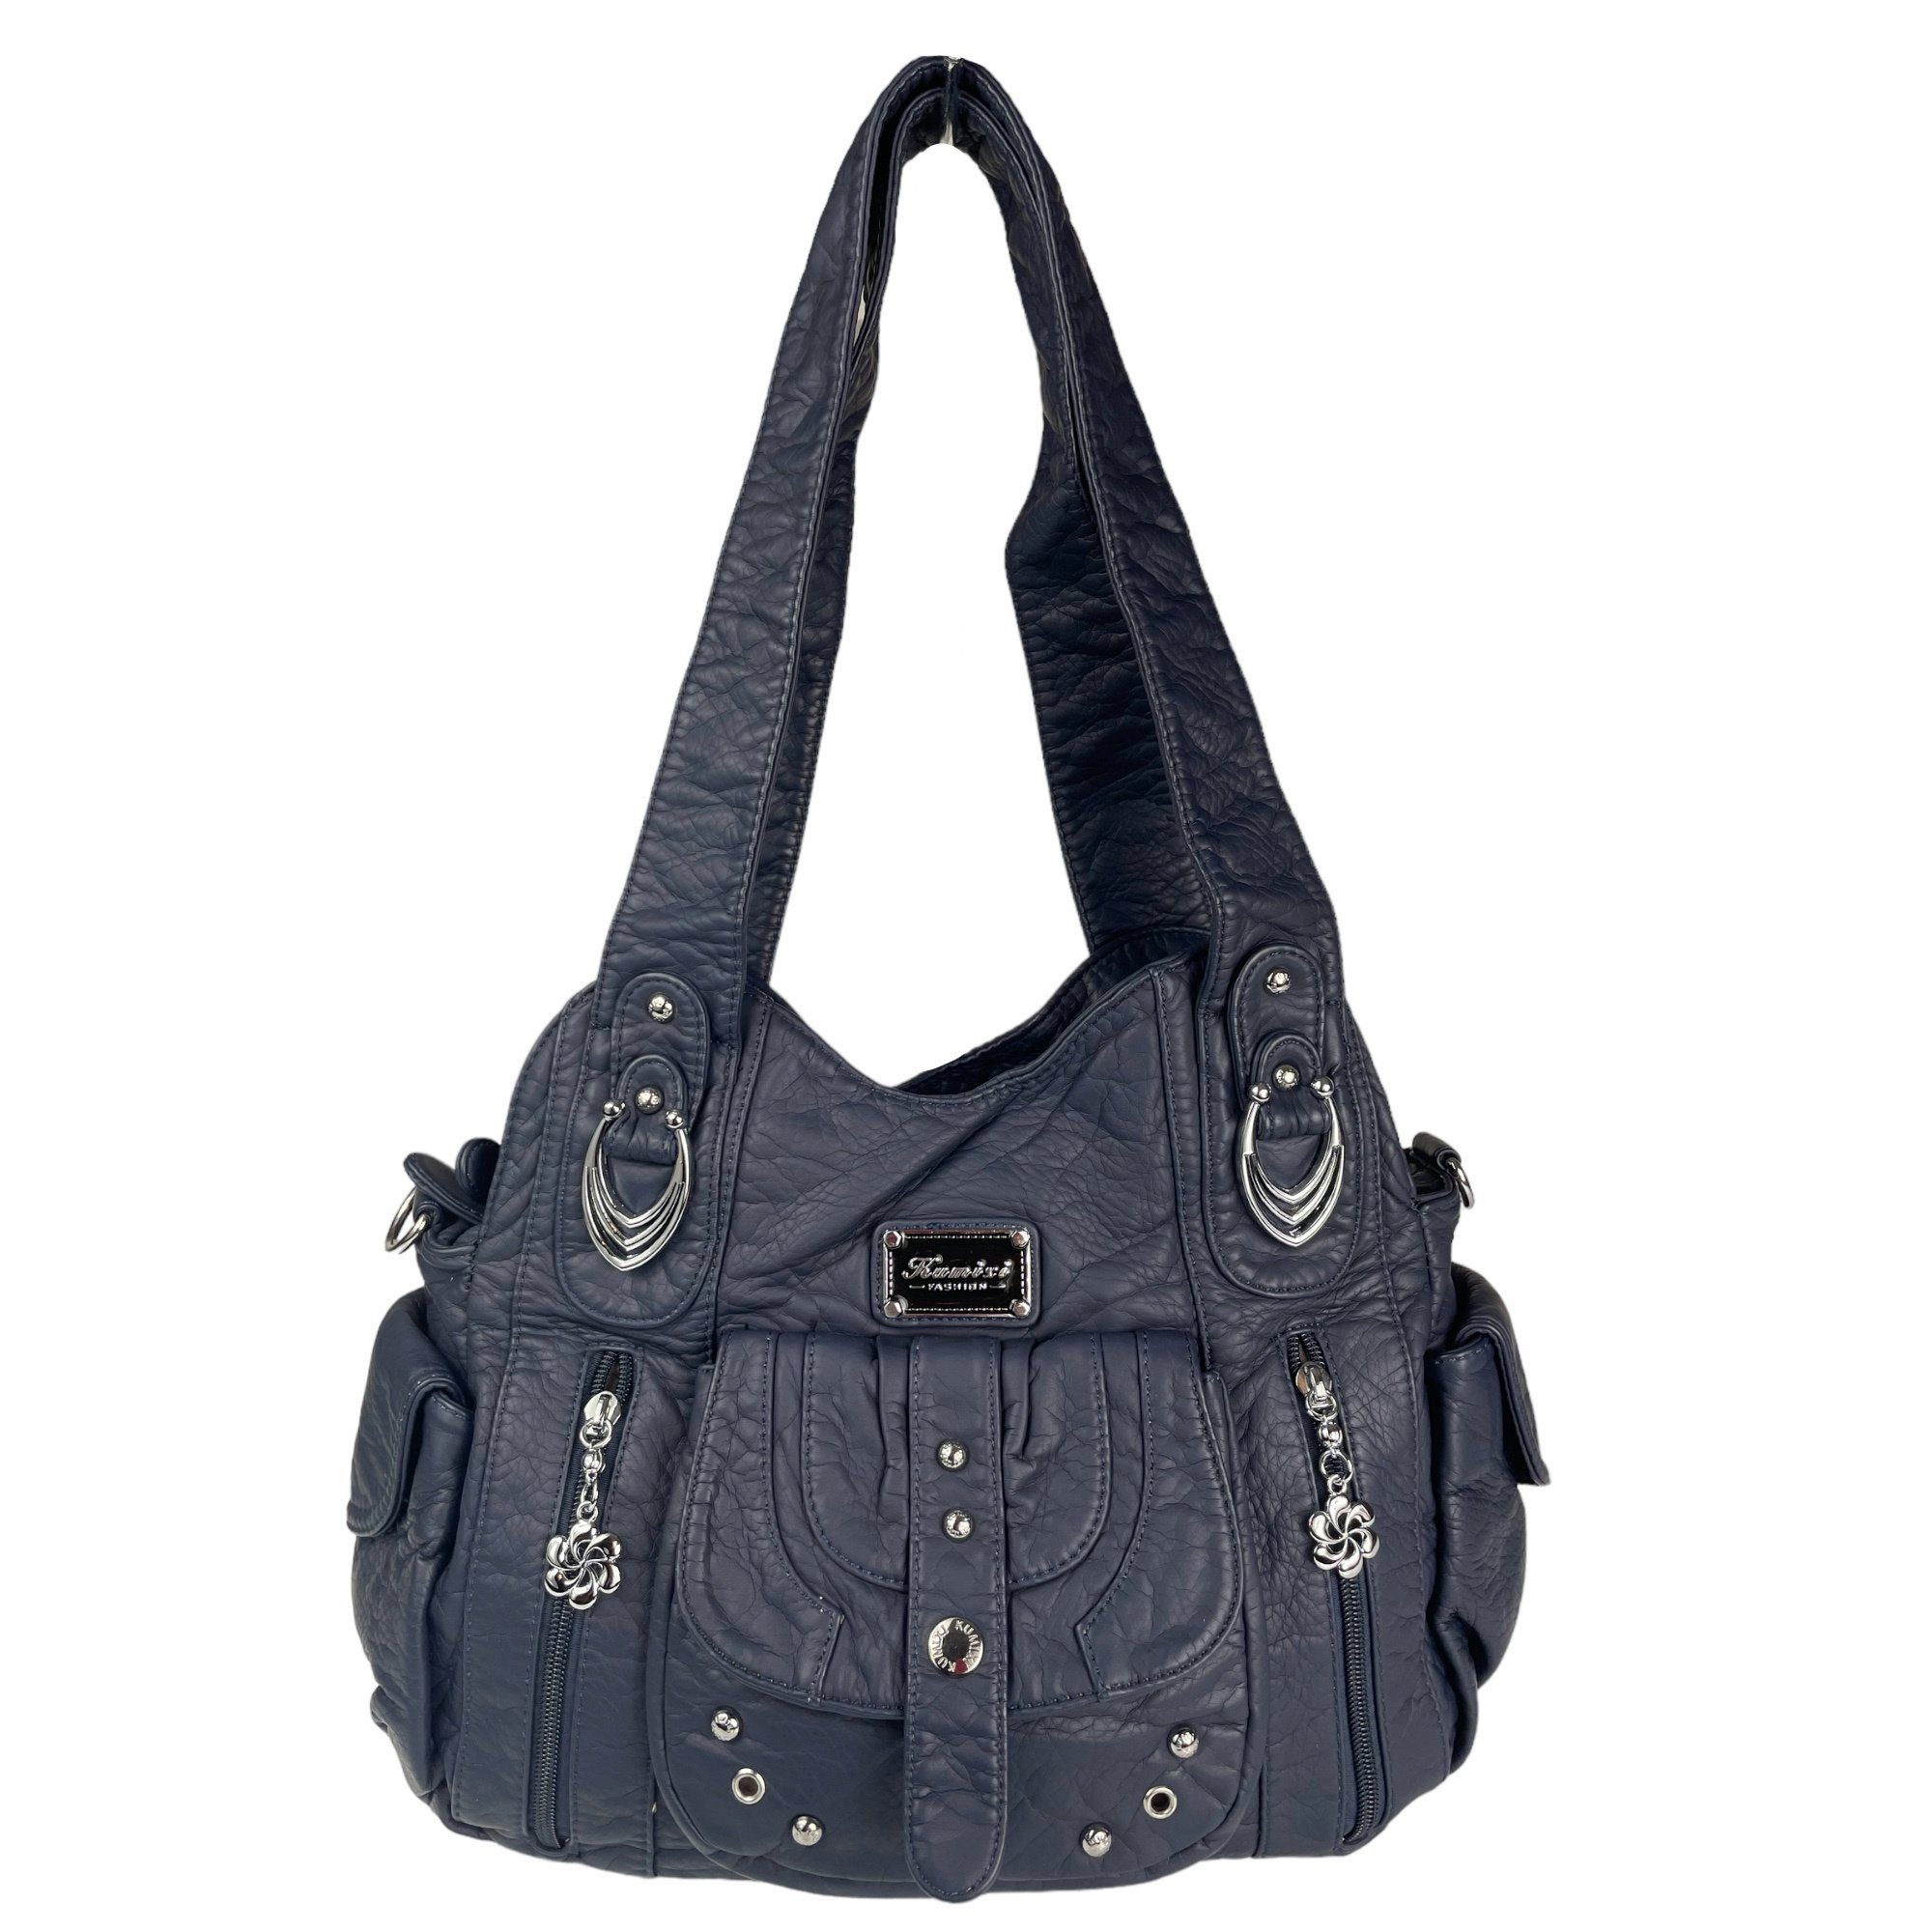 Taschen4life Schultertasche Damen Handtasche AKW22026, lange Tragegriffe & abnehmbarer Schulterriemen, Schultertasche dunkelblau